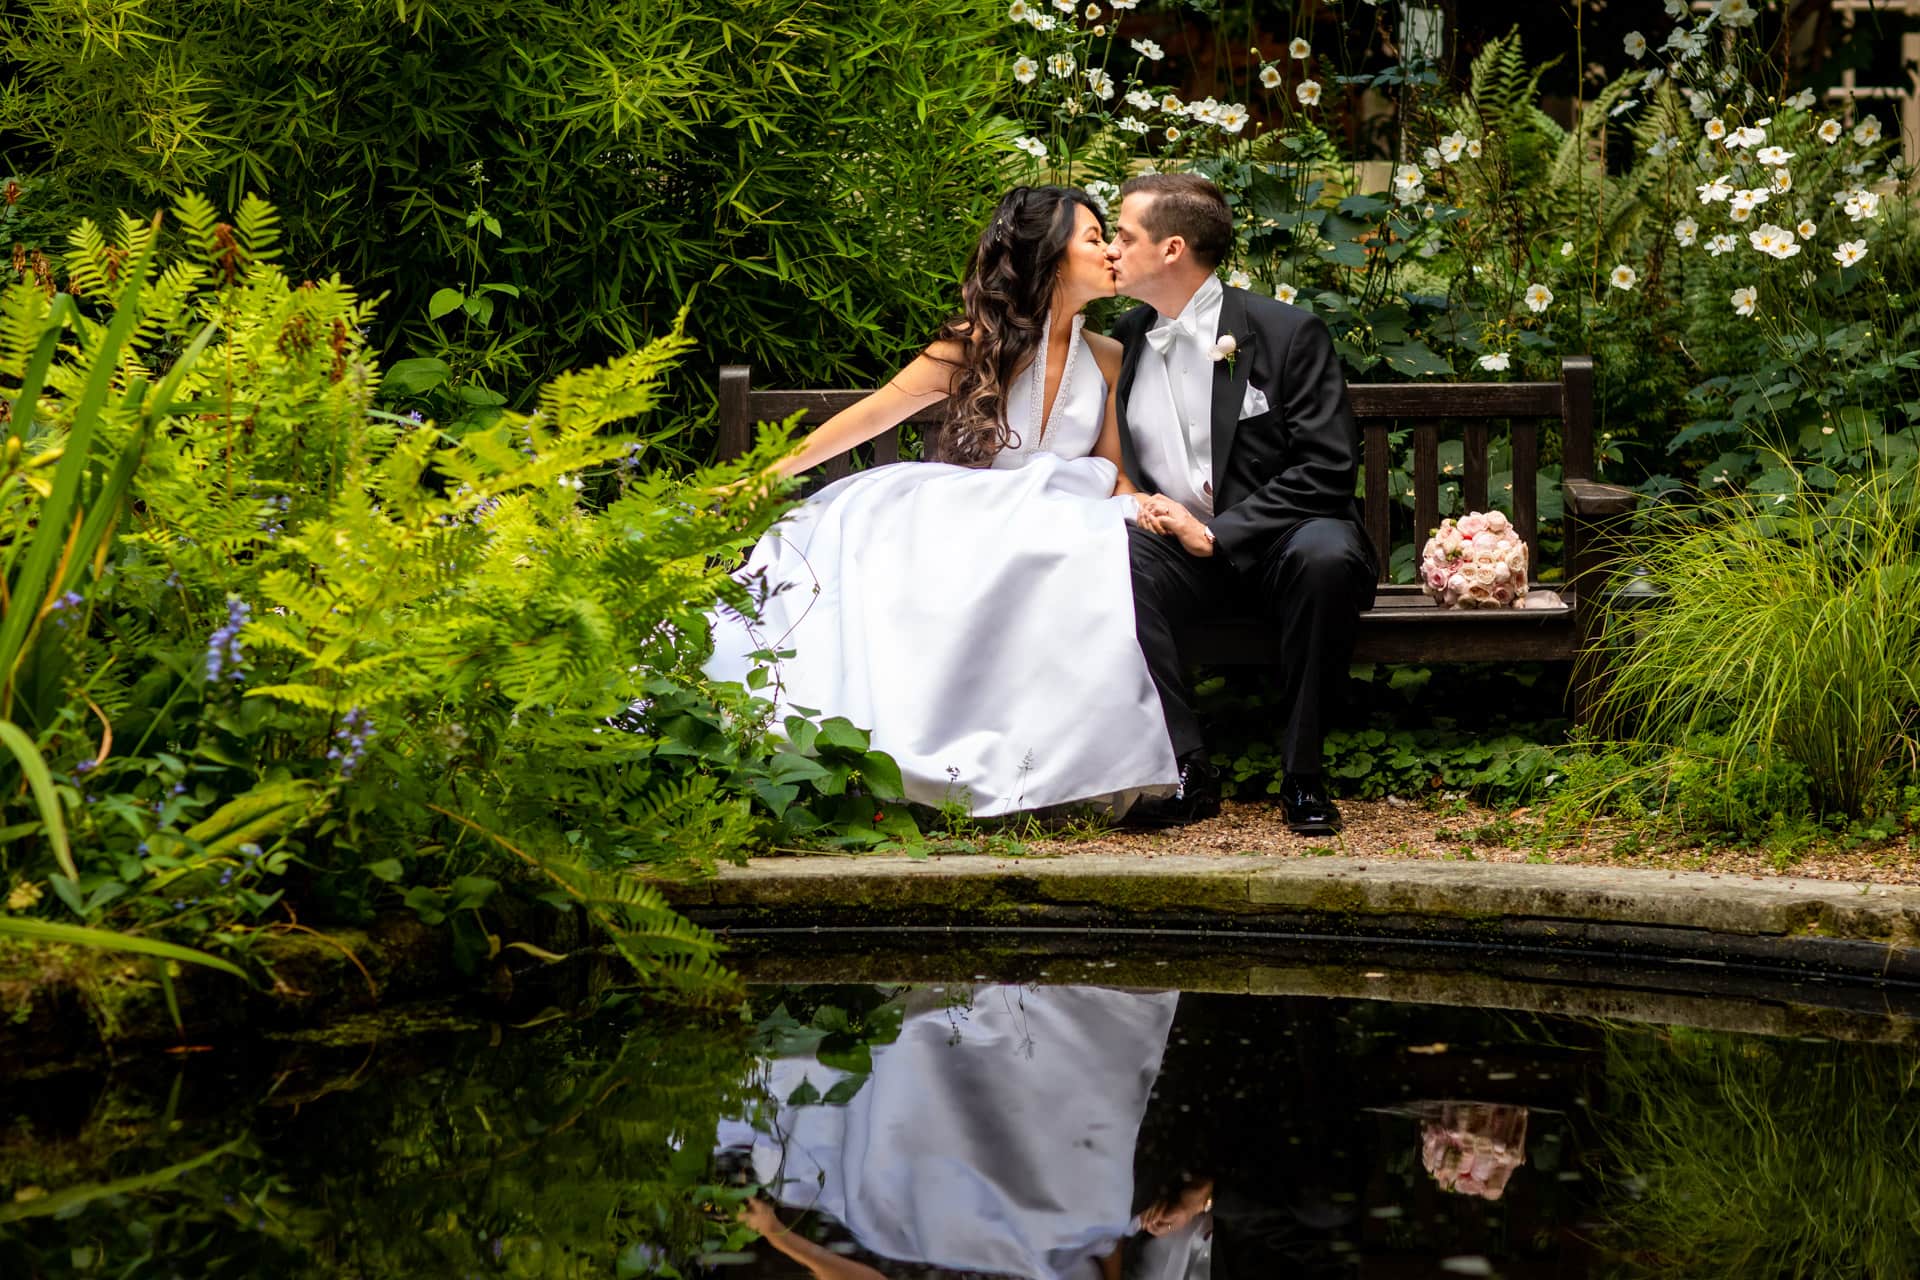 wedding photo by a pond